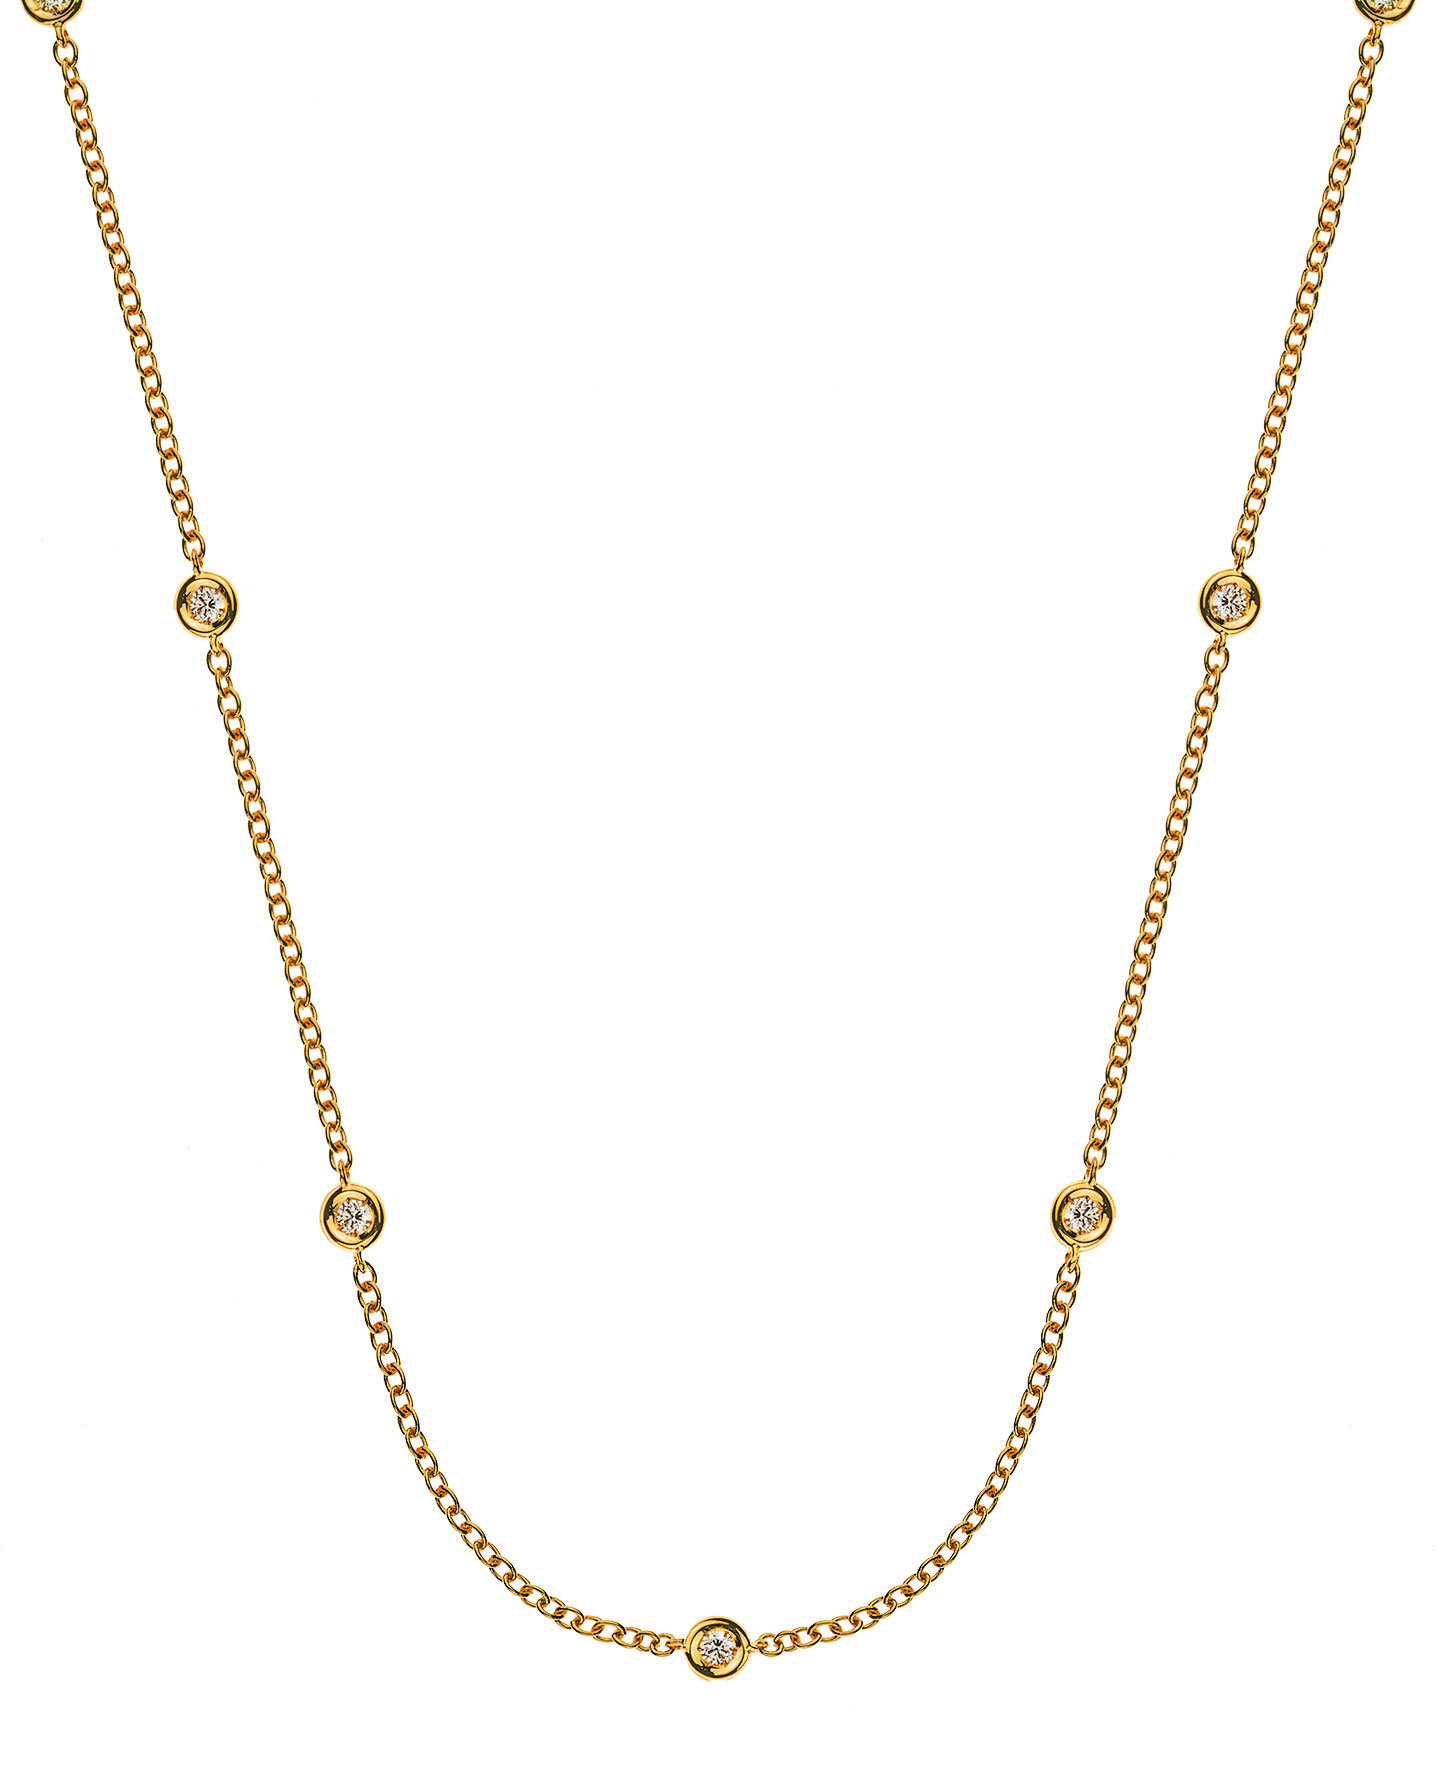 AURONOS Prestige Necklace yellow gold 18K diamonds 0.30ct